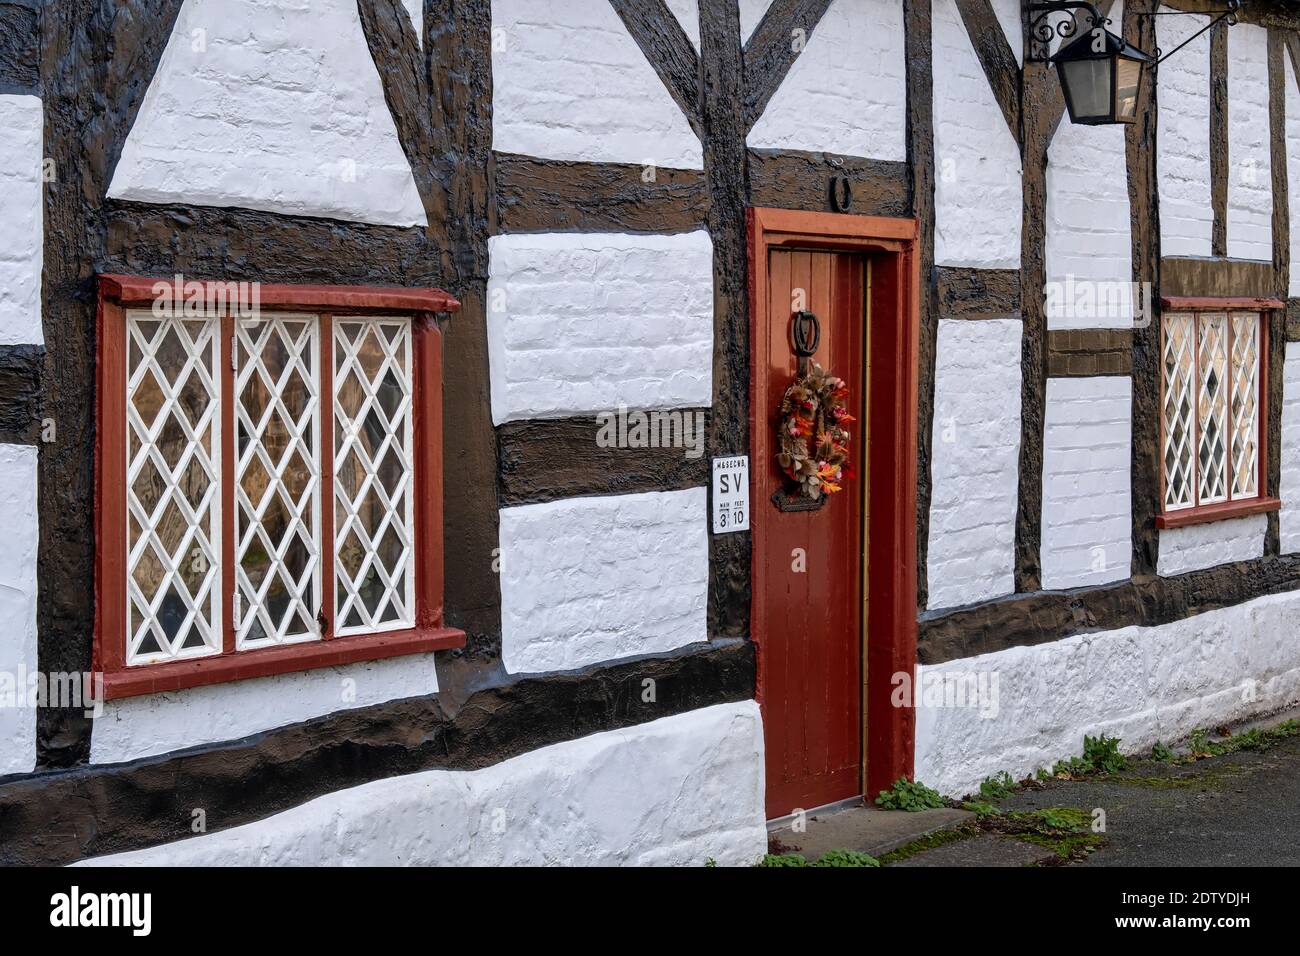 Exterior detail of Smithy Cottage, Beeston, Cheshire, England, UK Stock Photo